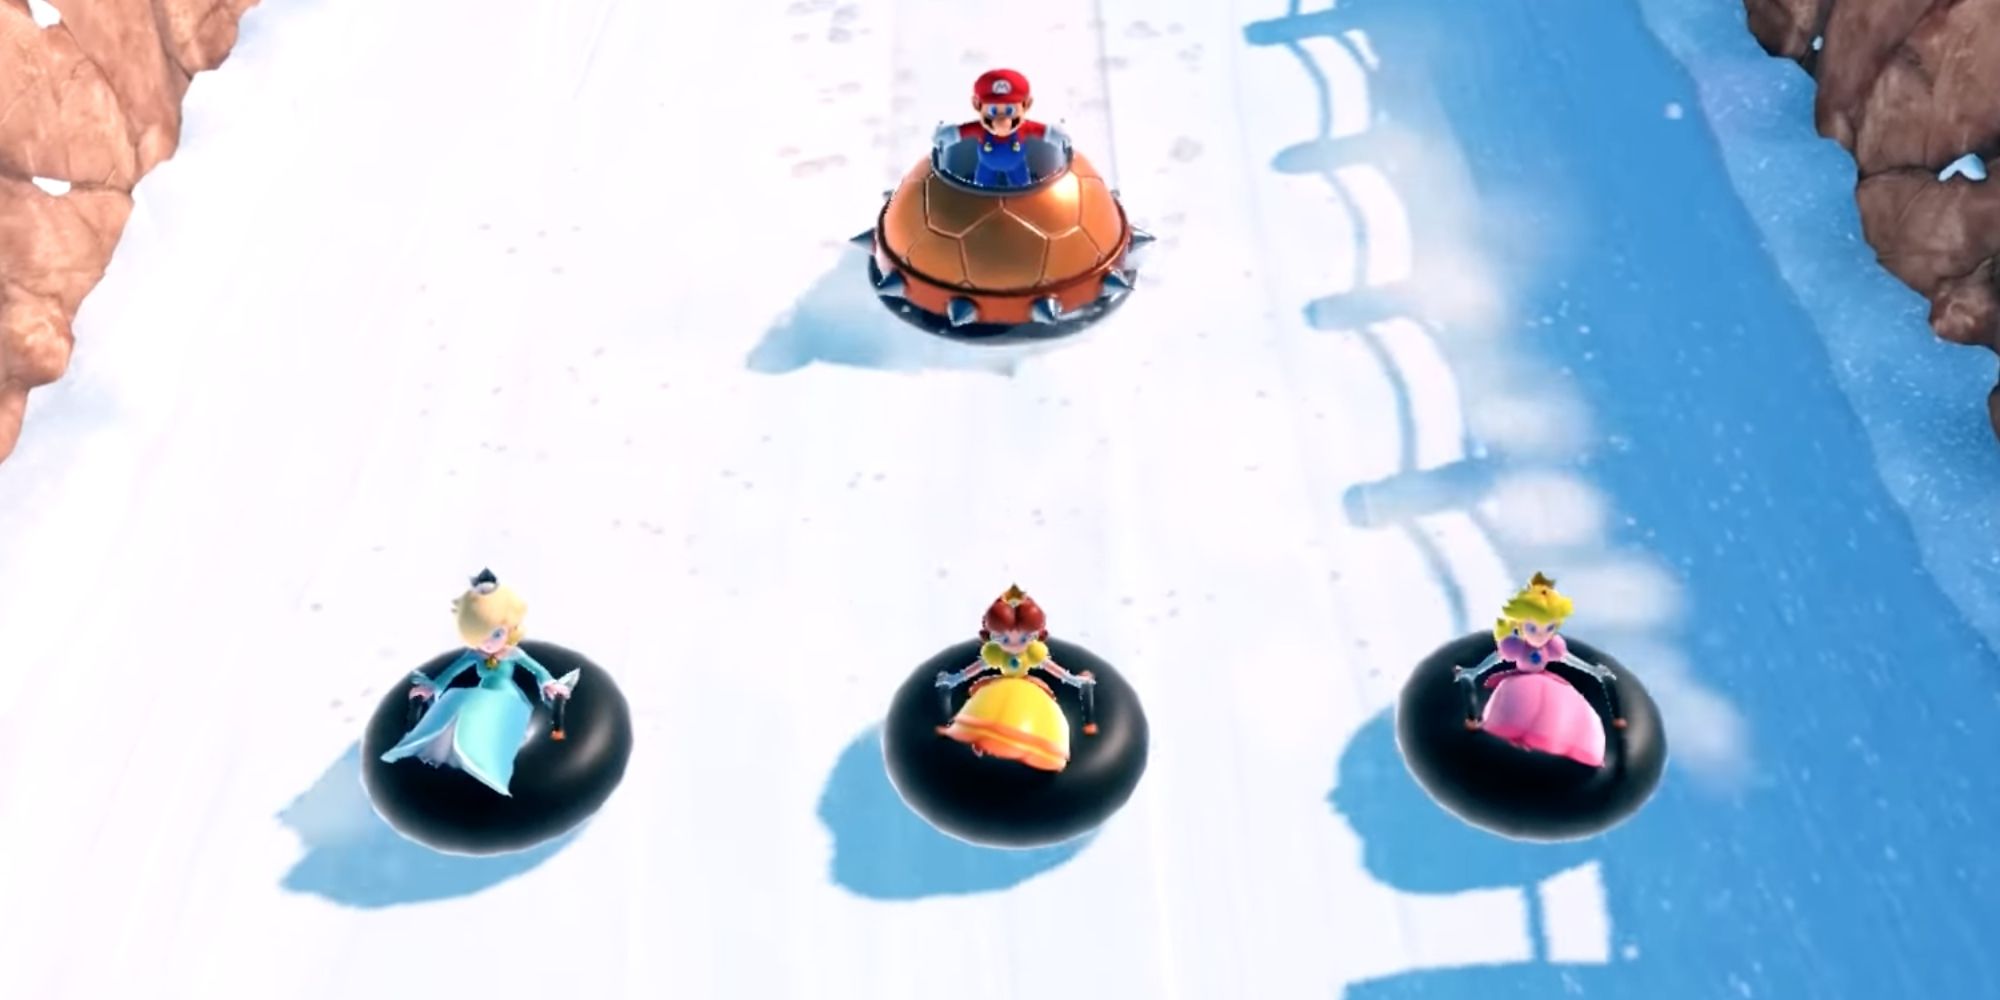 Tube It or Lose It from Mario Party Featuring Mario, Rosalina, Princess Daisy, and Princess Peach